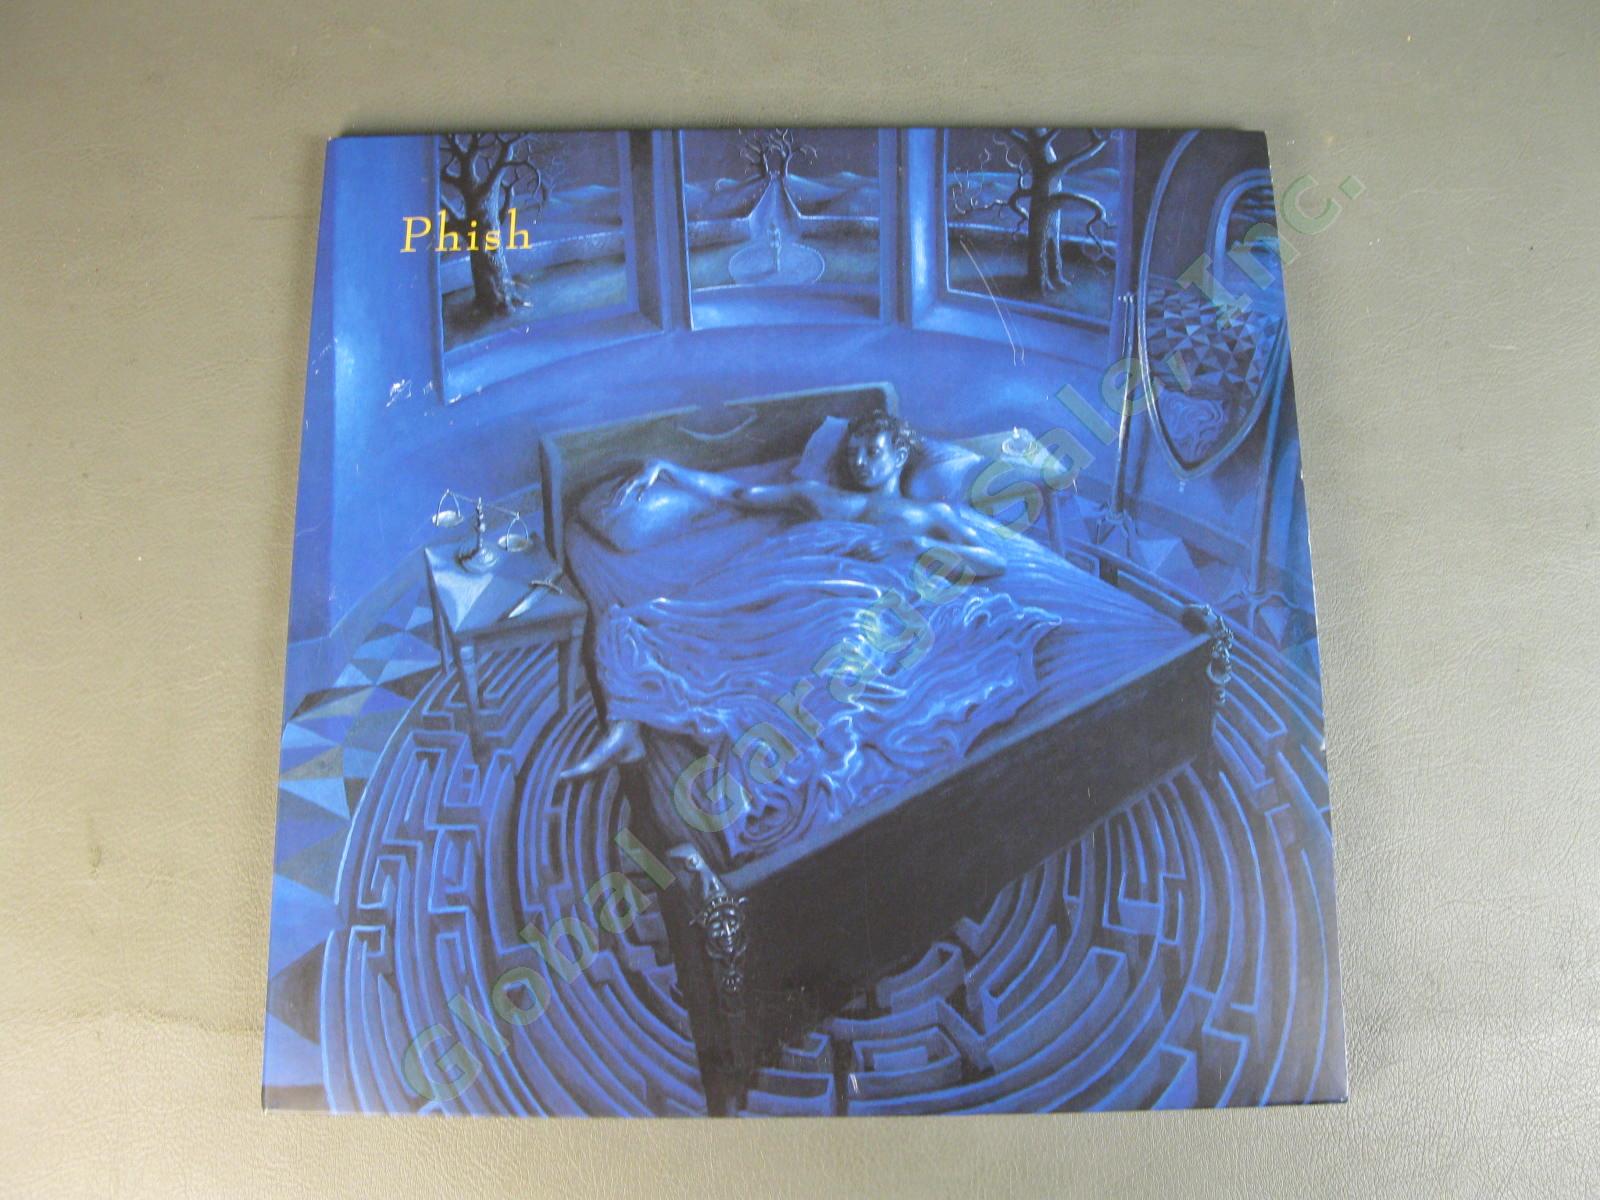 2015 PHISH Limited Edition Rift LP Record Album #8174 Welker Print Jemp1085 NR